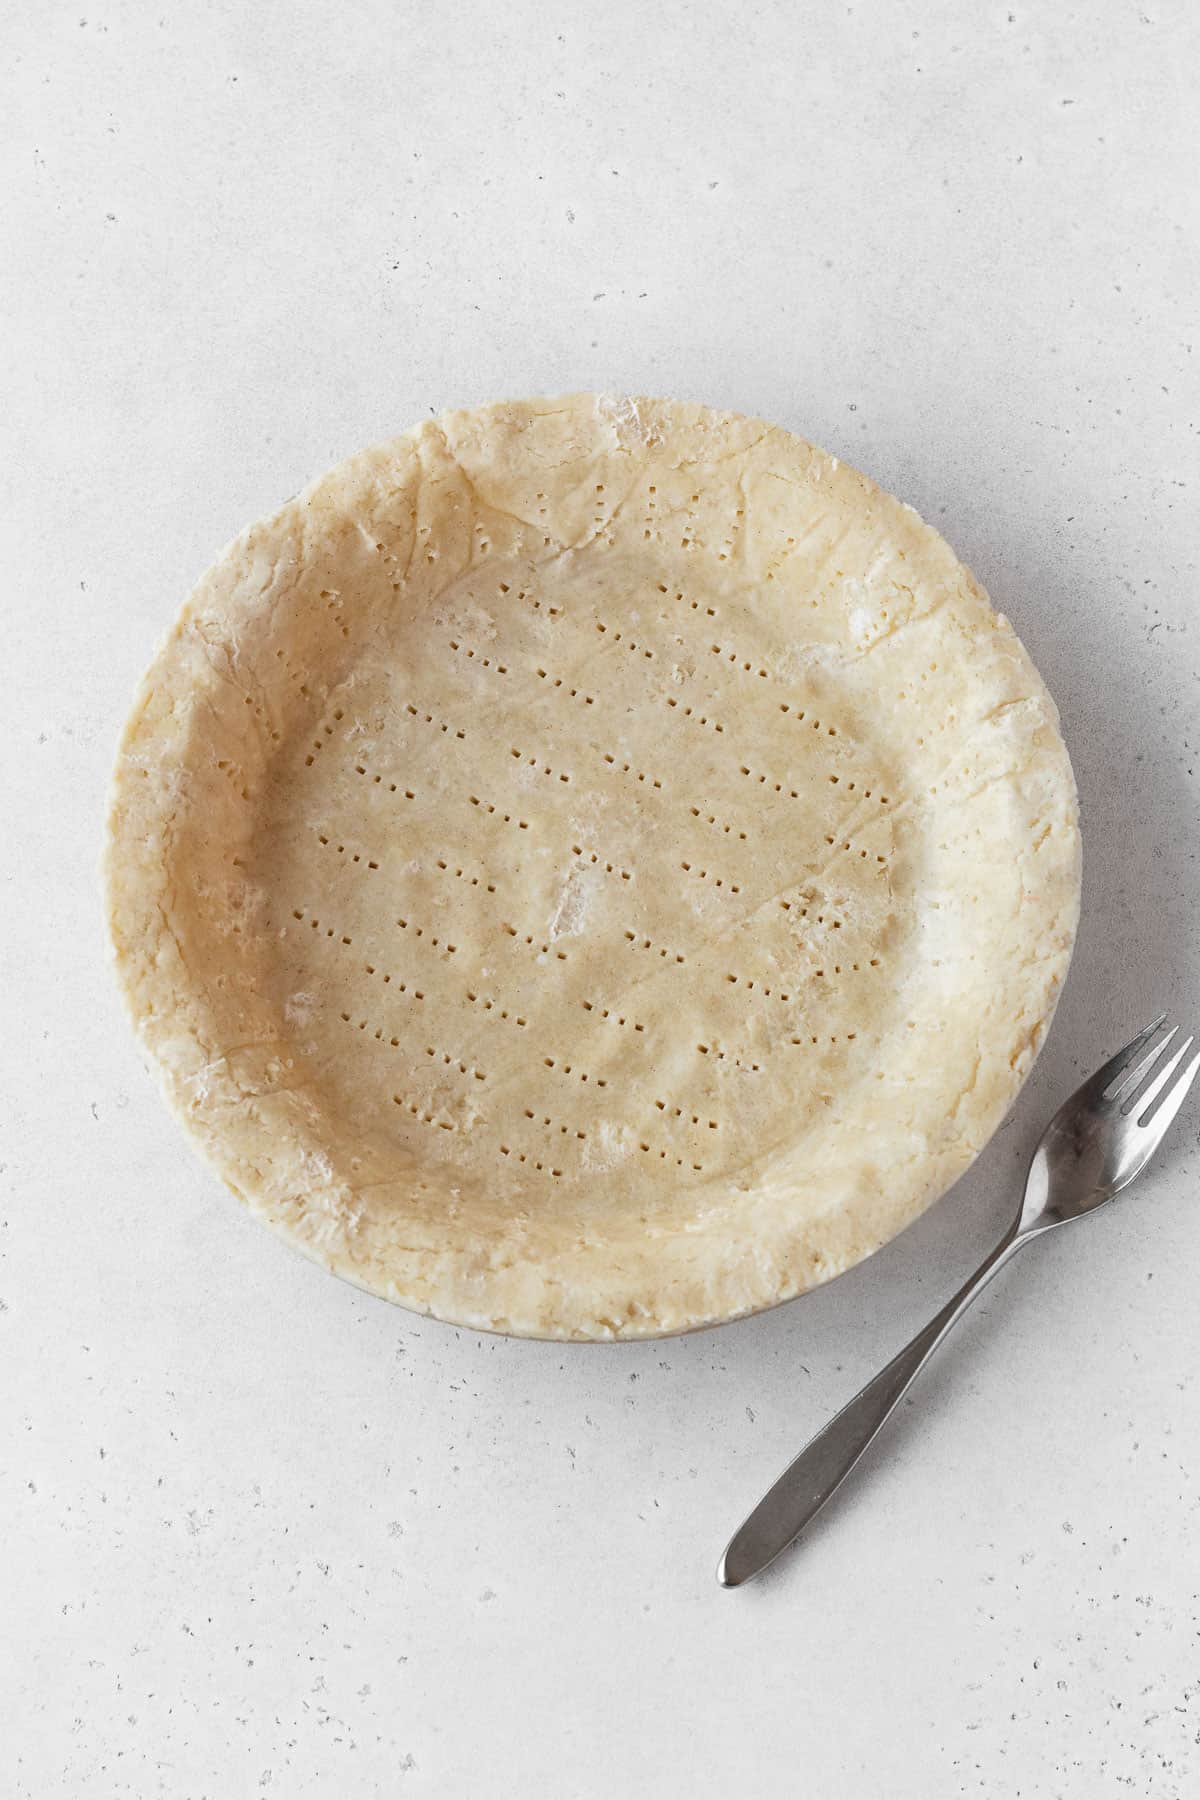 Pie dough pressed into a pie plate.